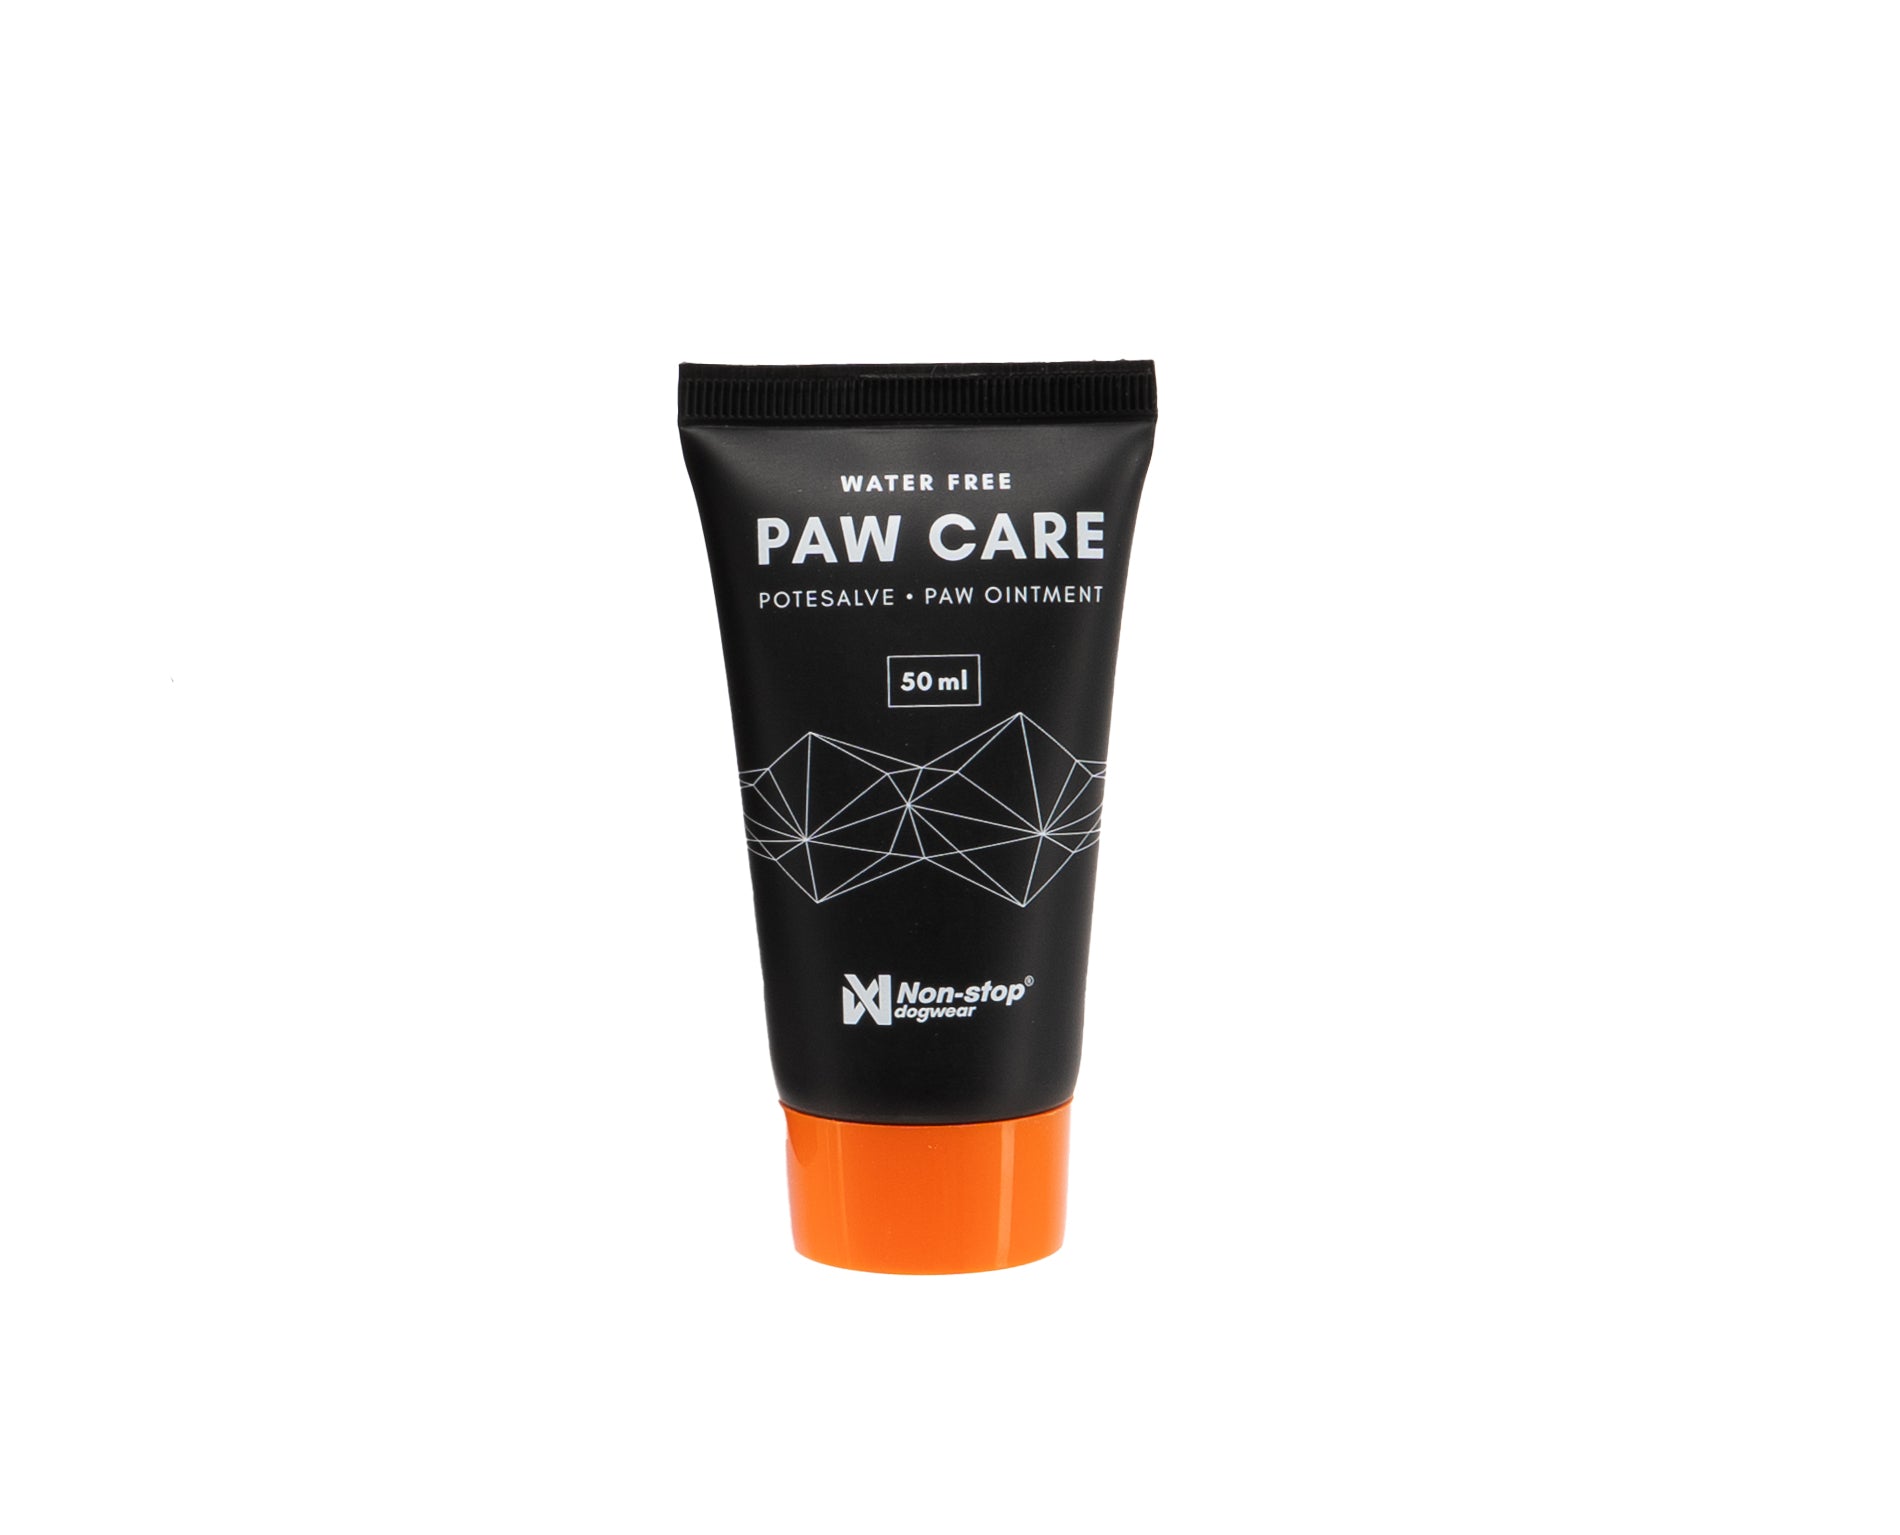 Non-stop Dogwear Paw Care pflegende Pfoetchenpflege